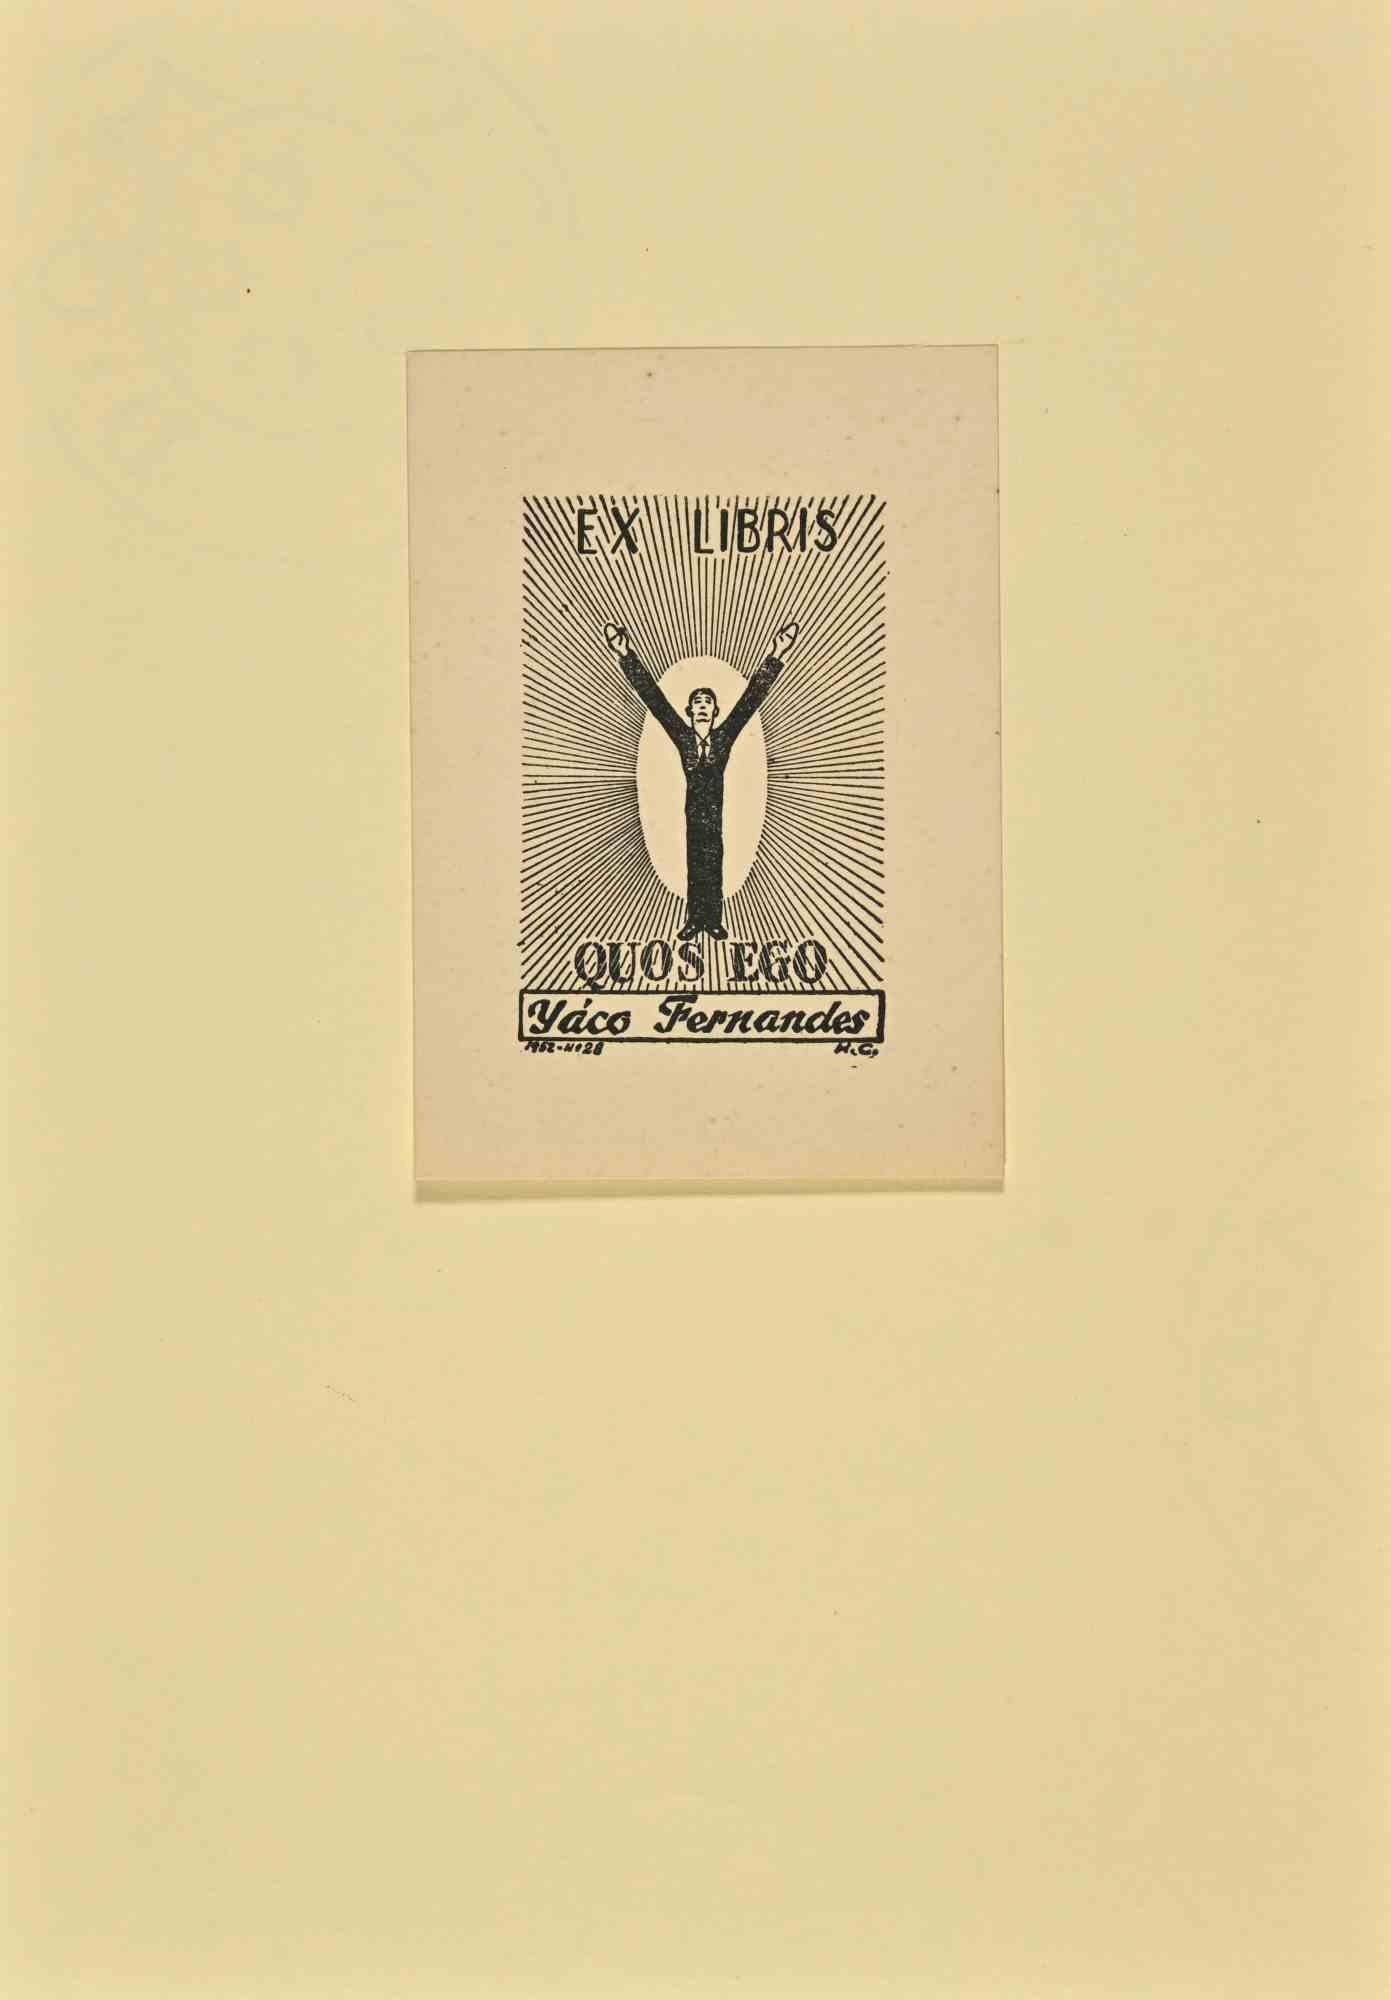 Unknown Figurative Print - Ex Libris - Quos Ego. Yaco Fernandes - Woodcut - 1962